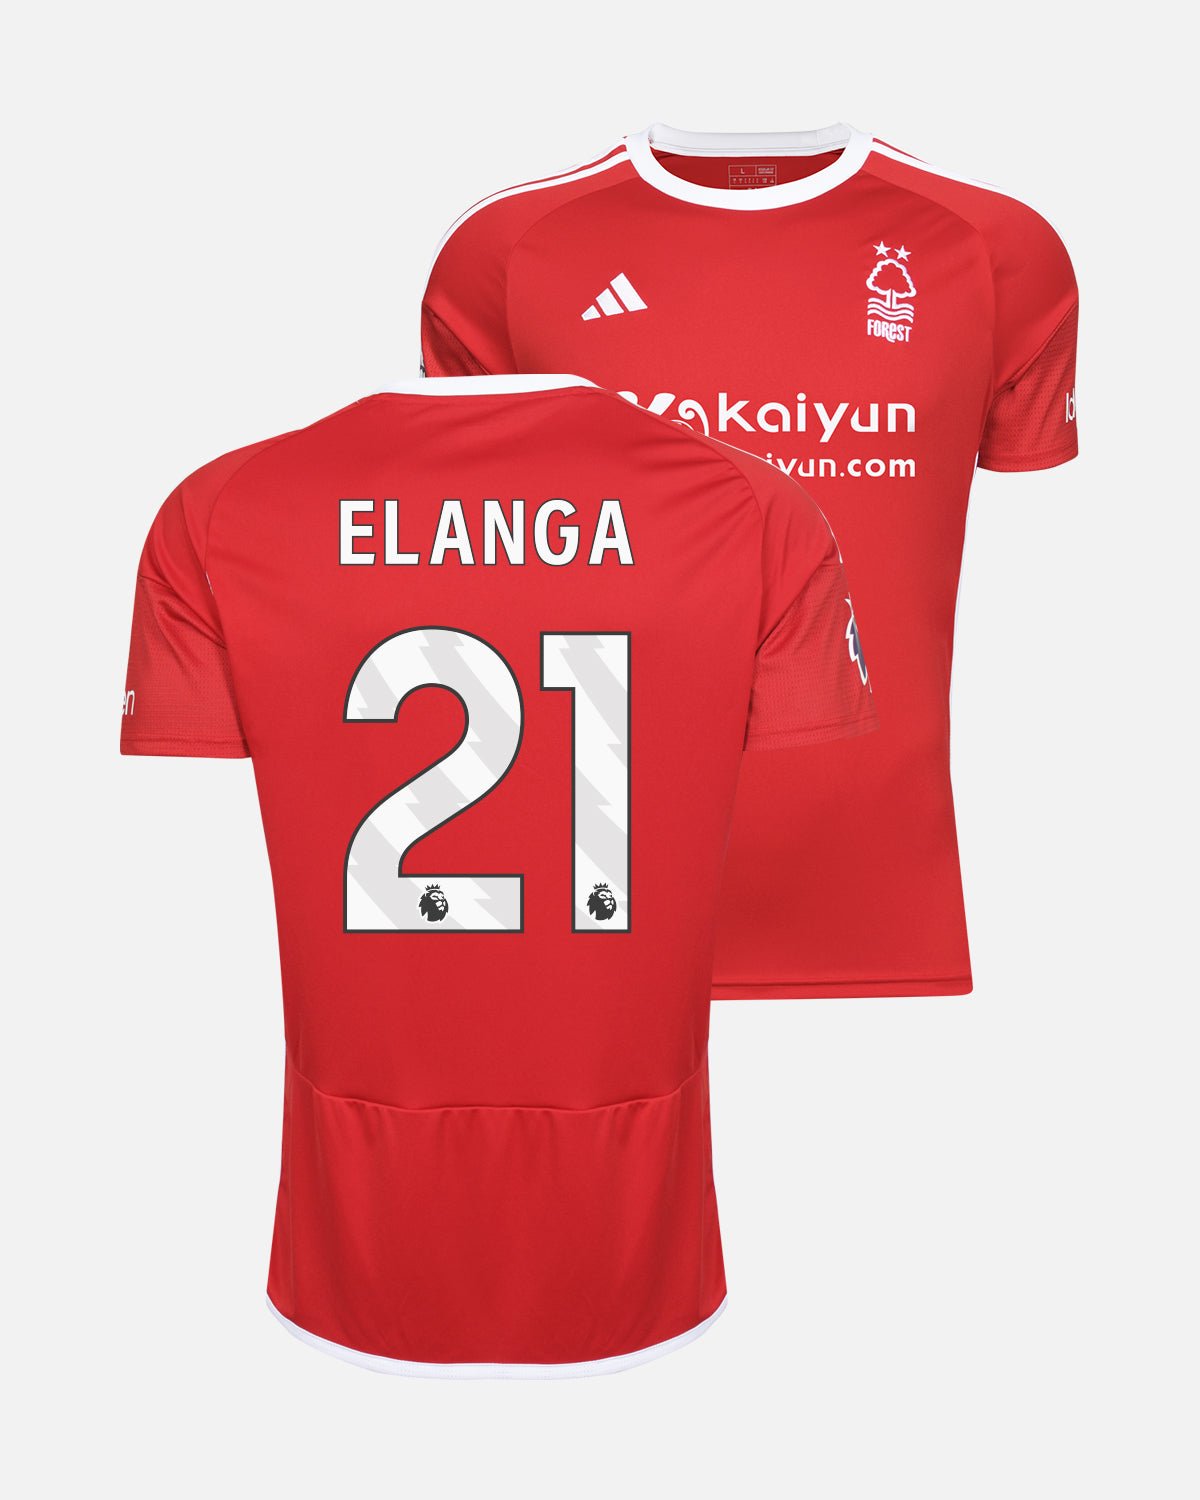 NFFC Home Shirt 23-24 - Elanga 21 - Nottingham Forest FC